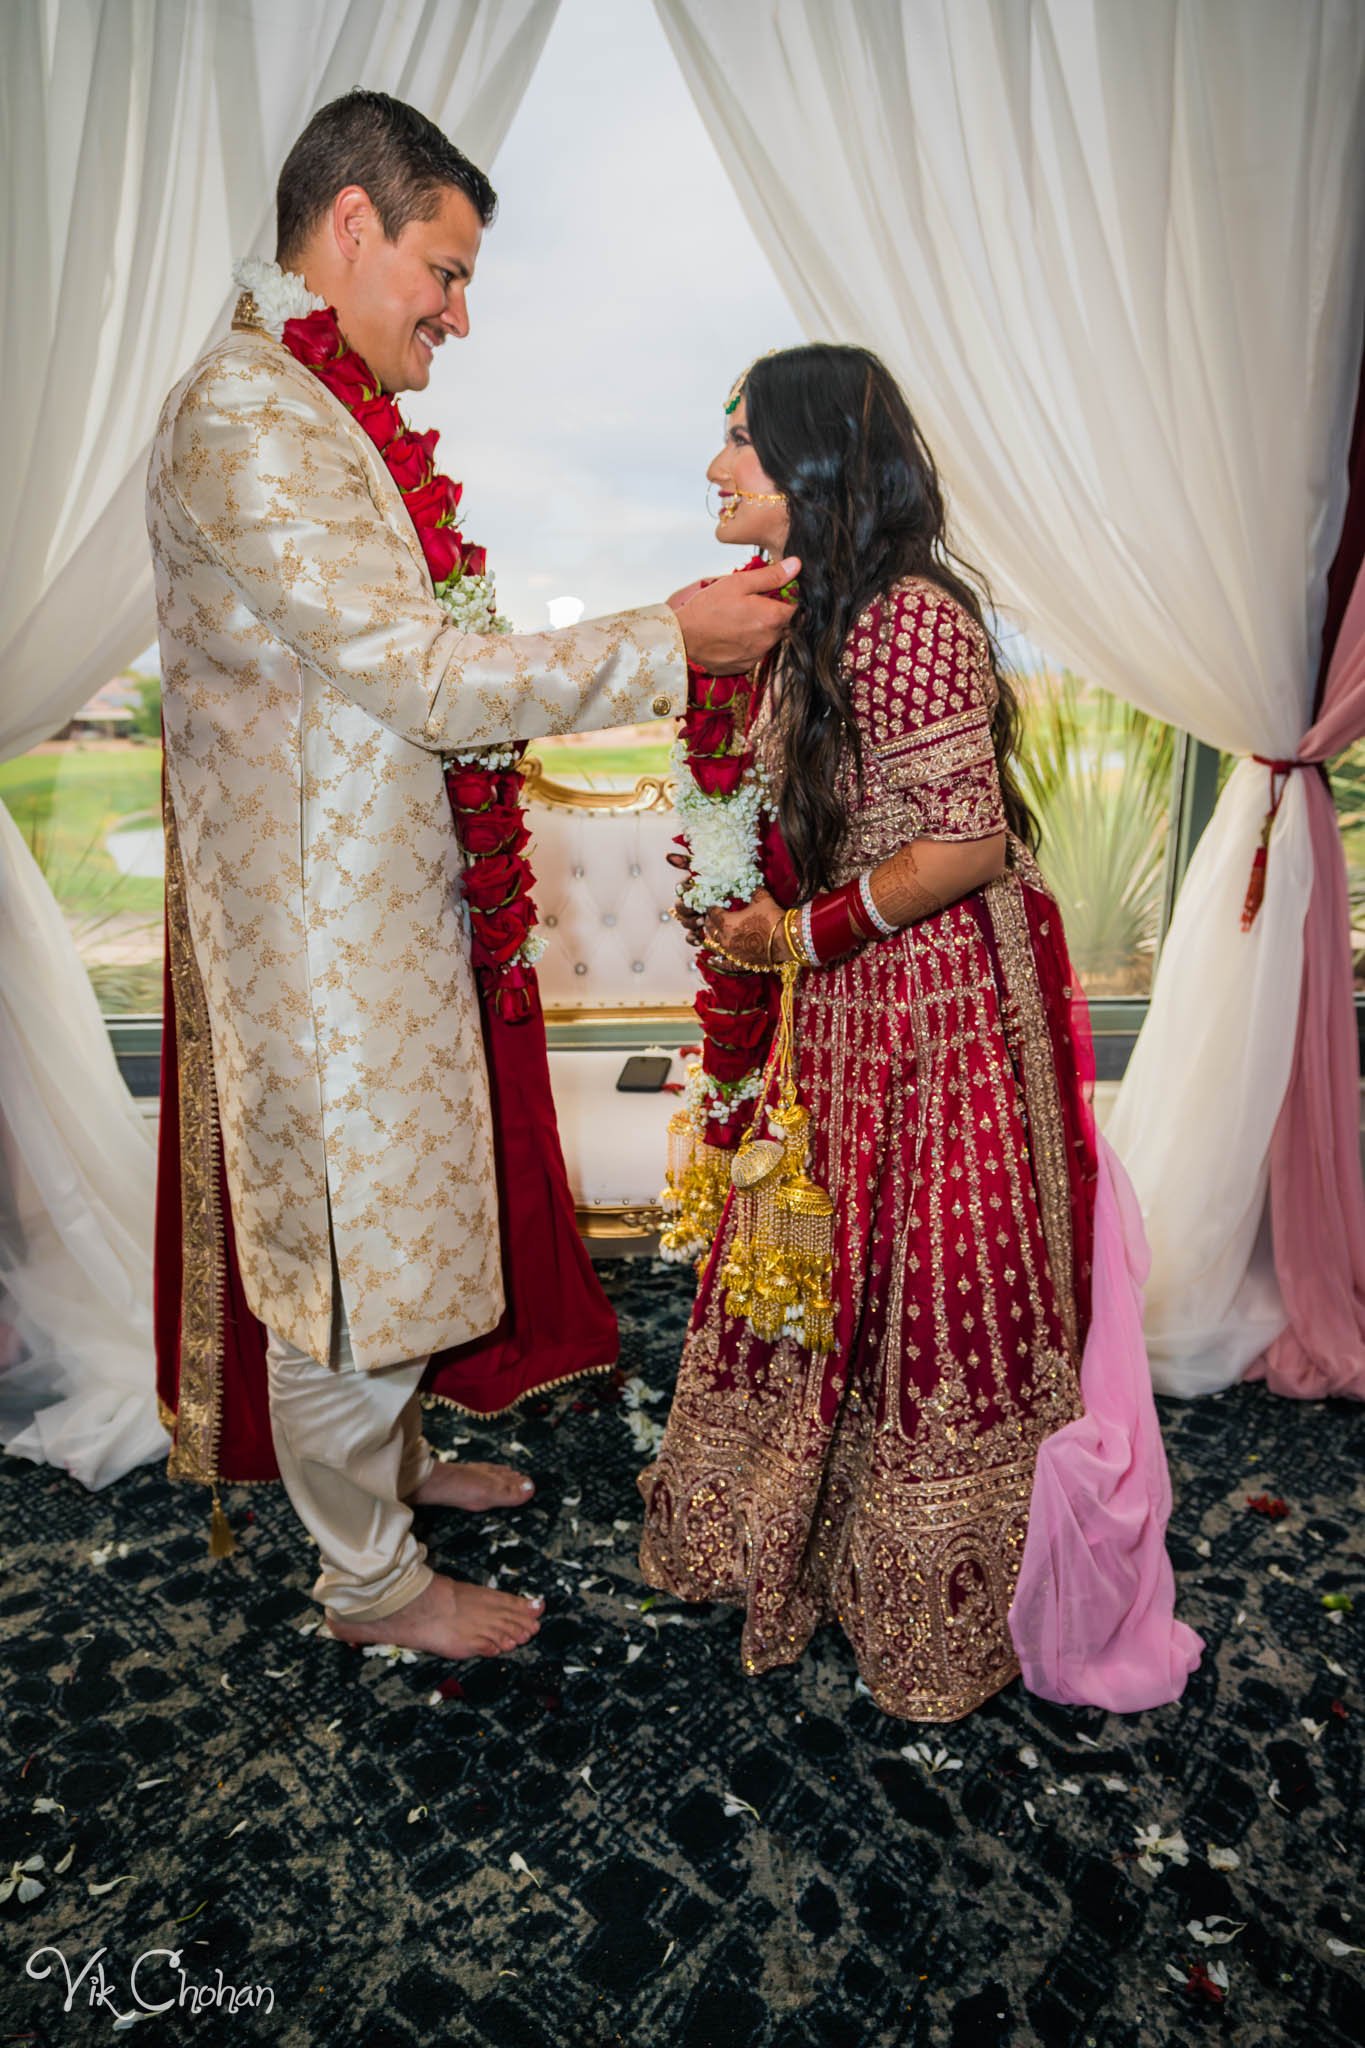 2022-06-09-Annie-&-Steven-Las-Vegas-Indian-Wedding-Ceremony-Photography-Vik-Chohan-Photography-Photo-Booth-Social-Media-VCP-206.jpg